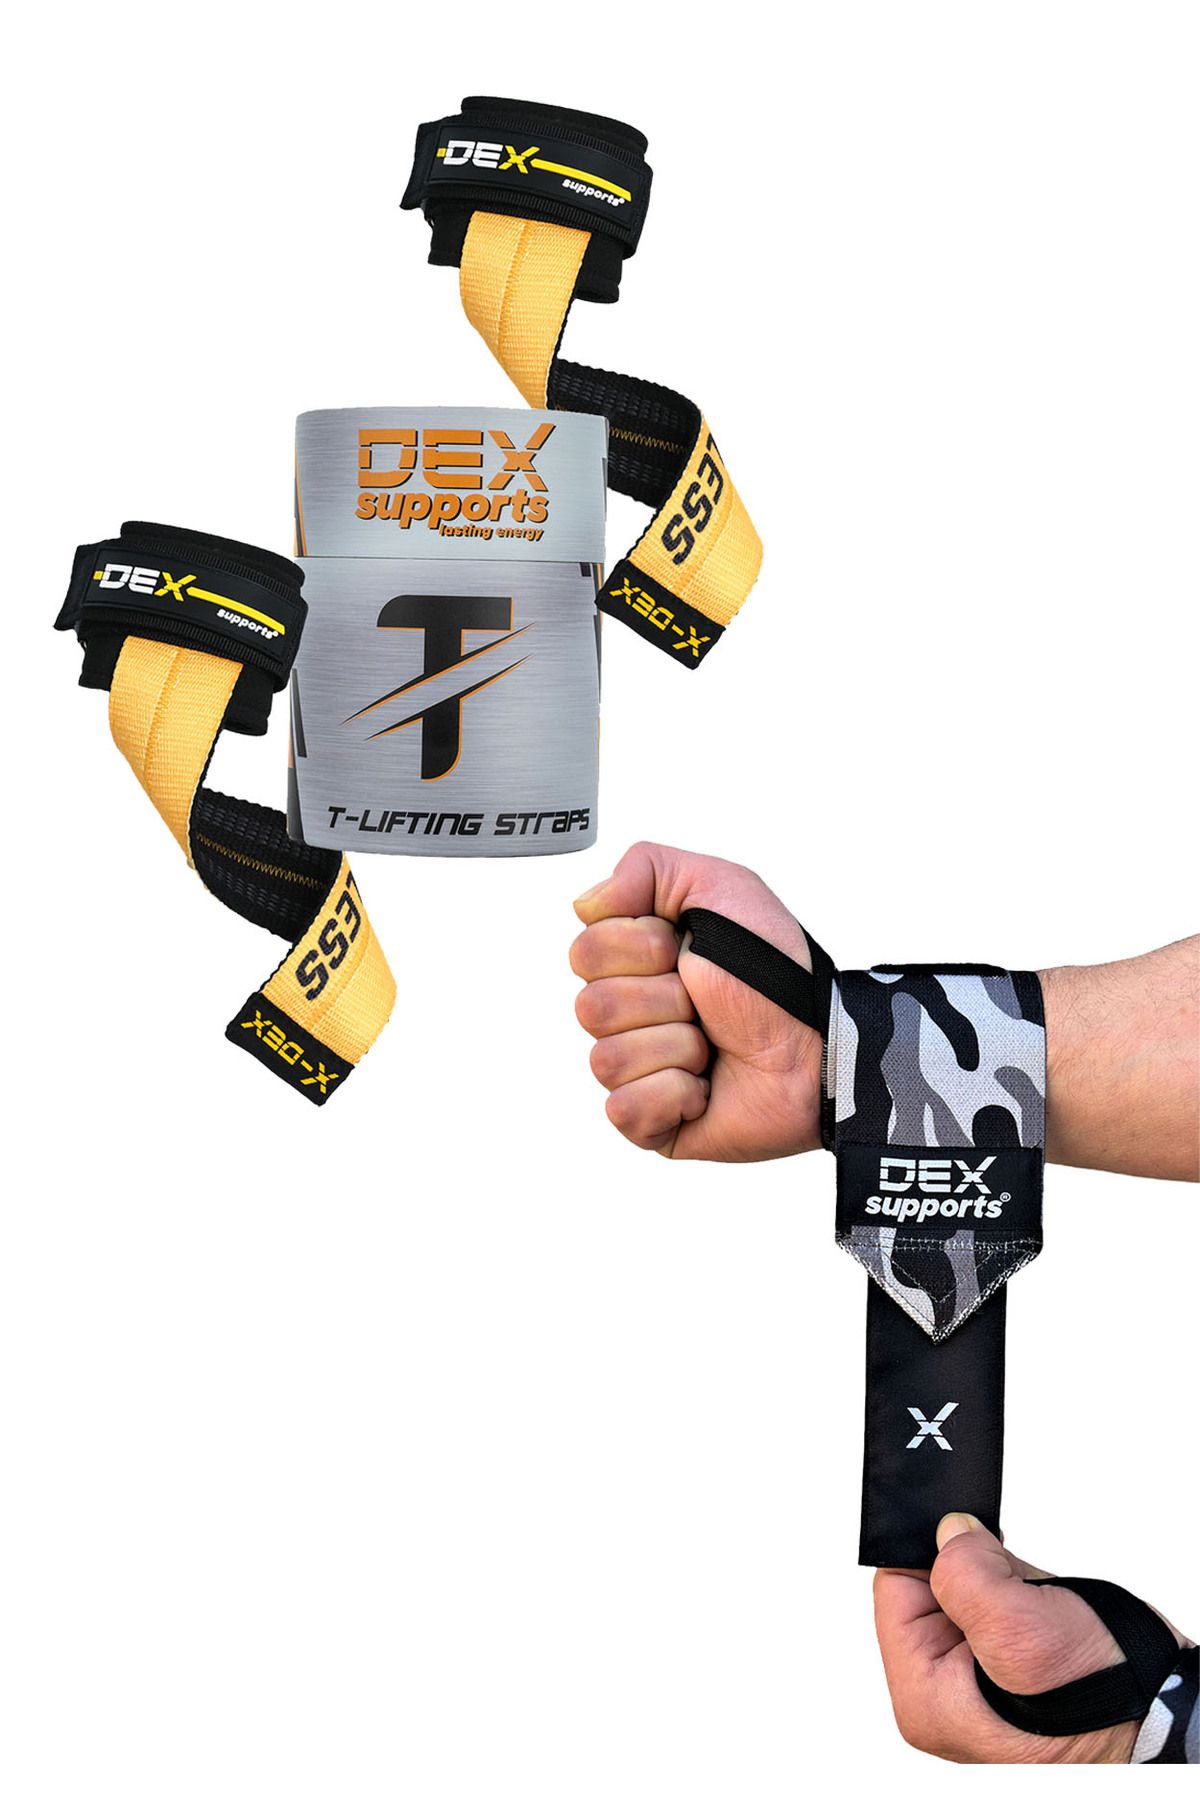 Dex Supports Lasting Energy Kamuflaj Wrist Wraps Spor Bilek Bandajı + Halter Kayışı G-Grips Lifting Straps 2'li Set